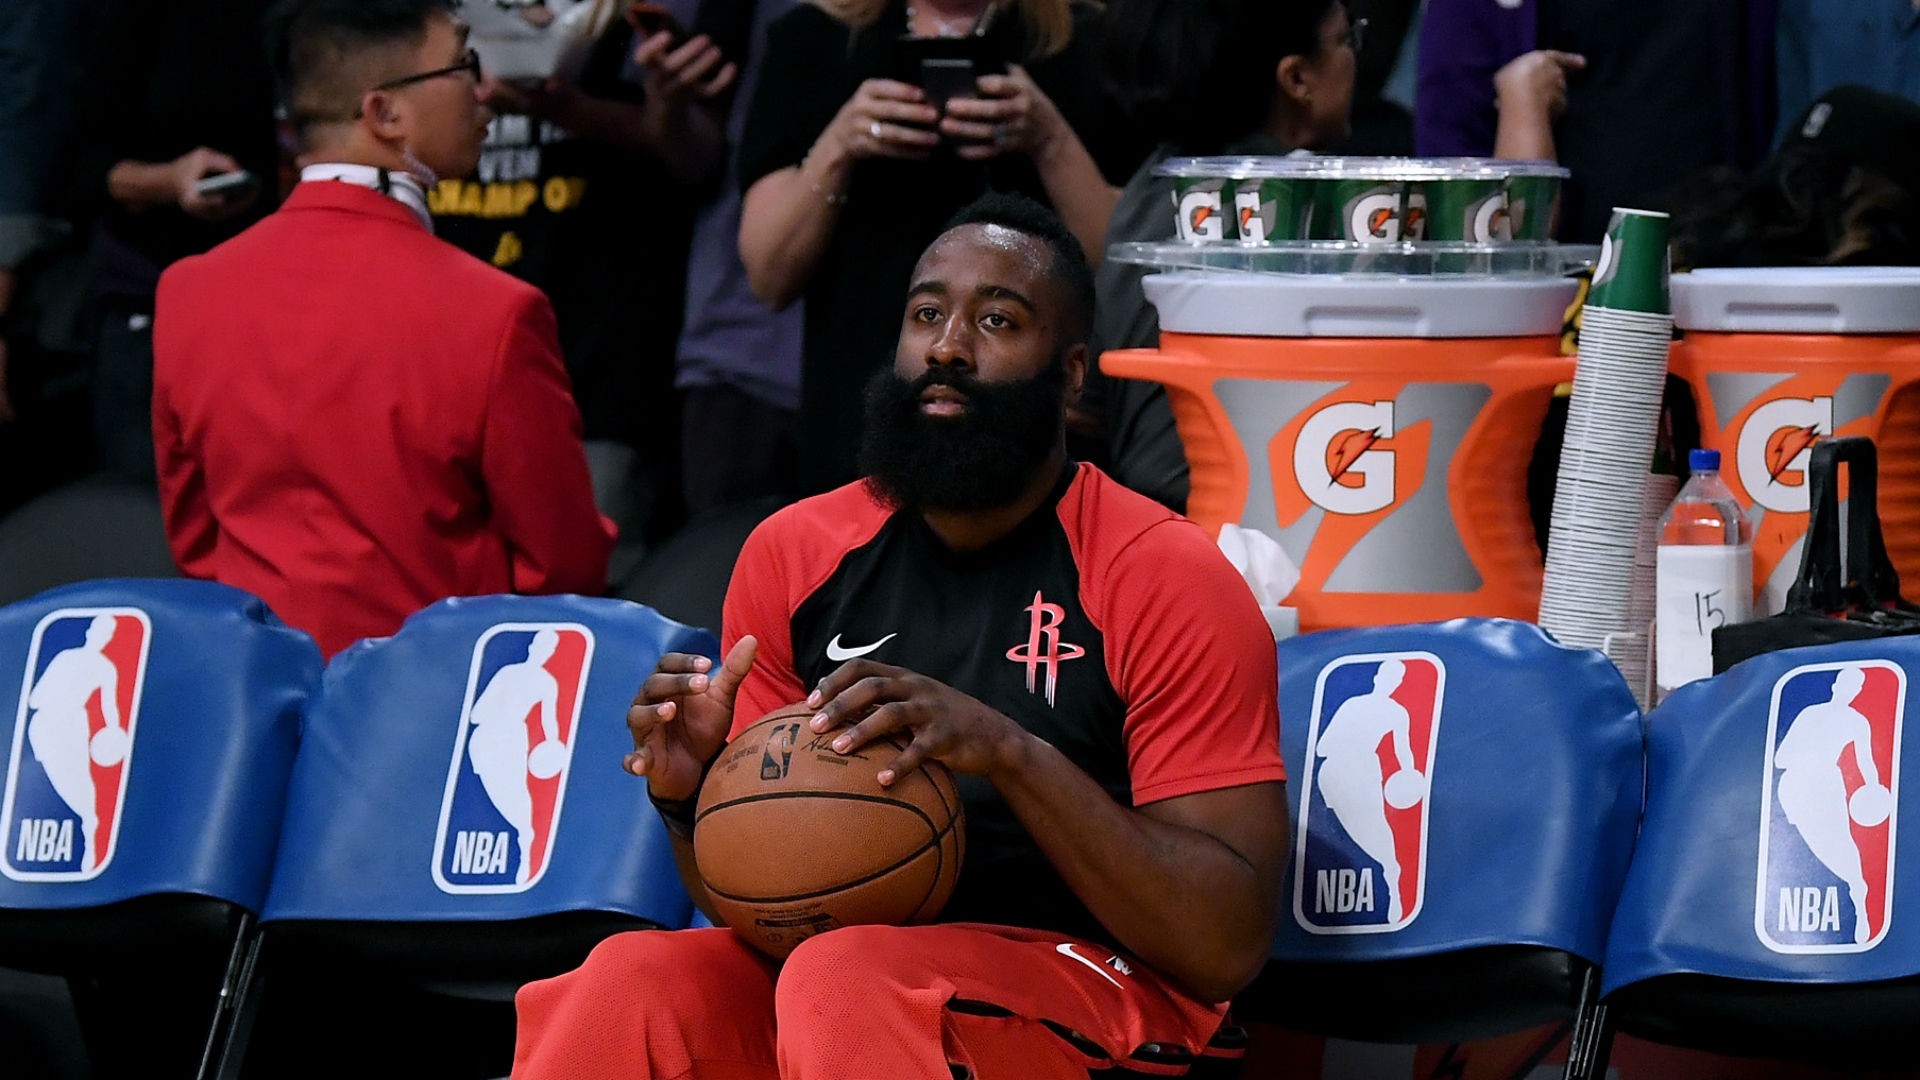 Kết quả trực tiếp NBA 2018-19: San Antonio Spurs 96-89 Houston Rockets - Ảnh 8.